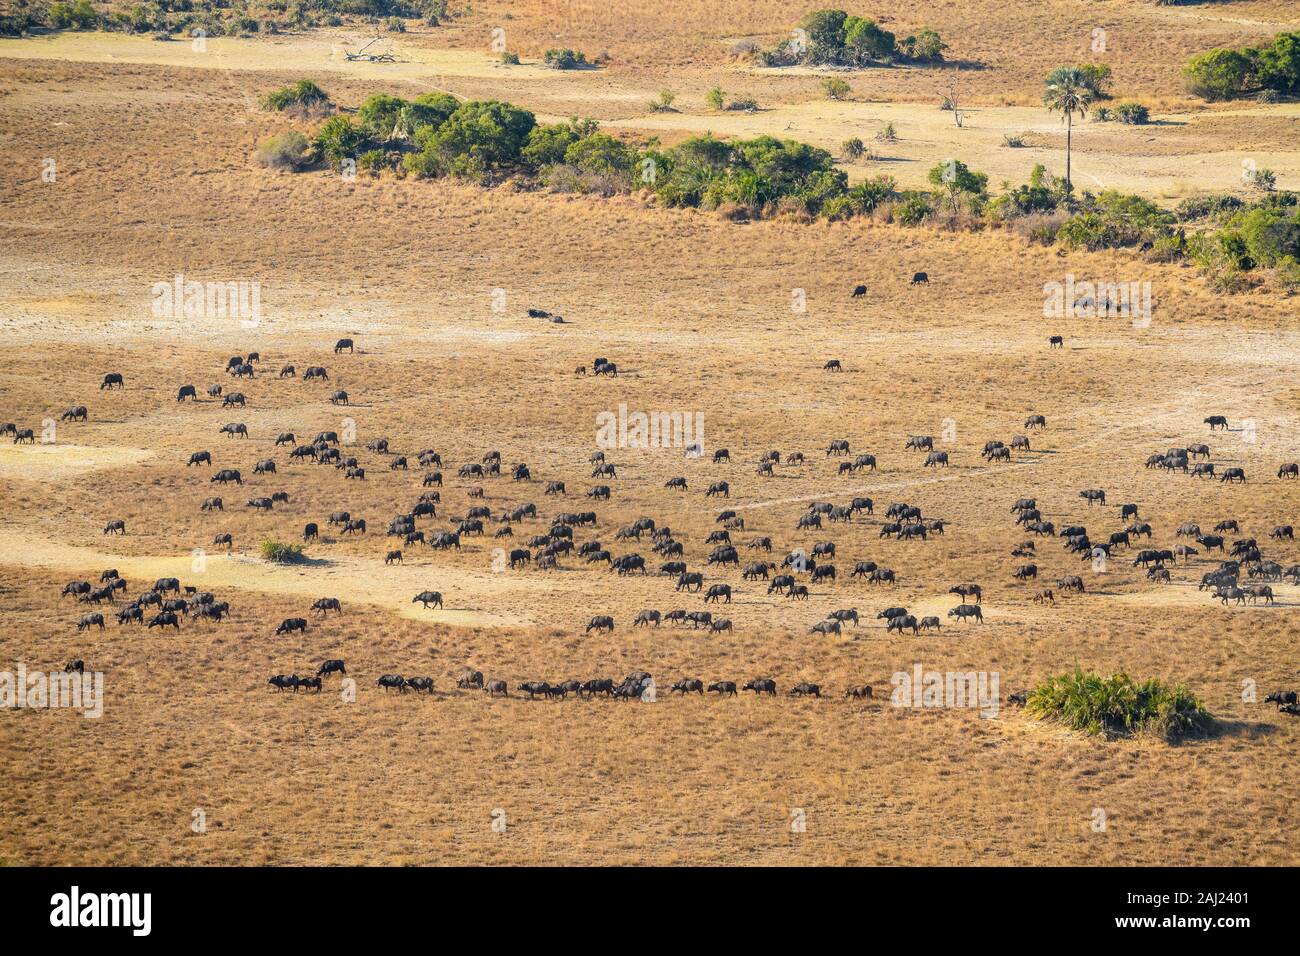 Vue aérienne d'un troupeau de buffles africains (Buffle) (Syncerus caffer), Macatoo, Okavango Delta, Botswana, Africa Banque D'Images